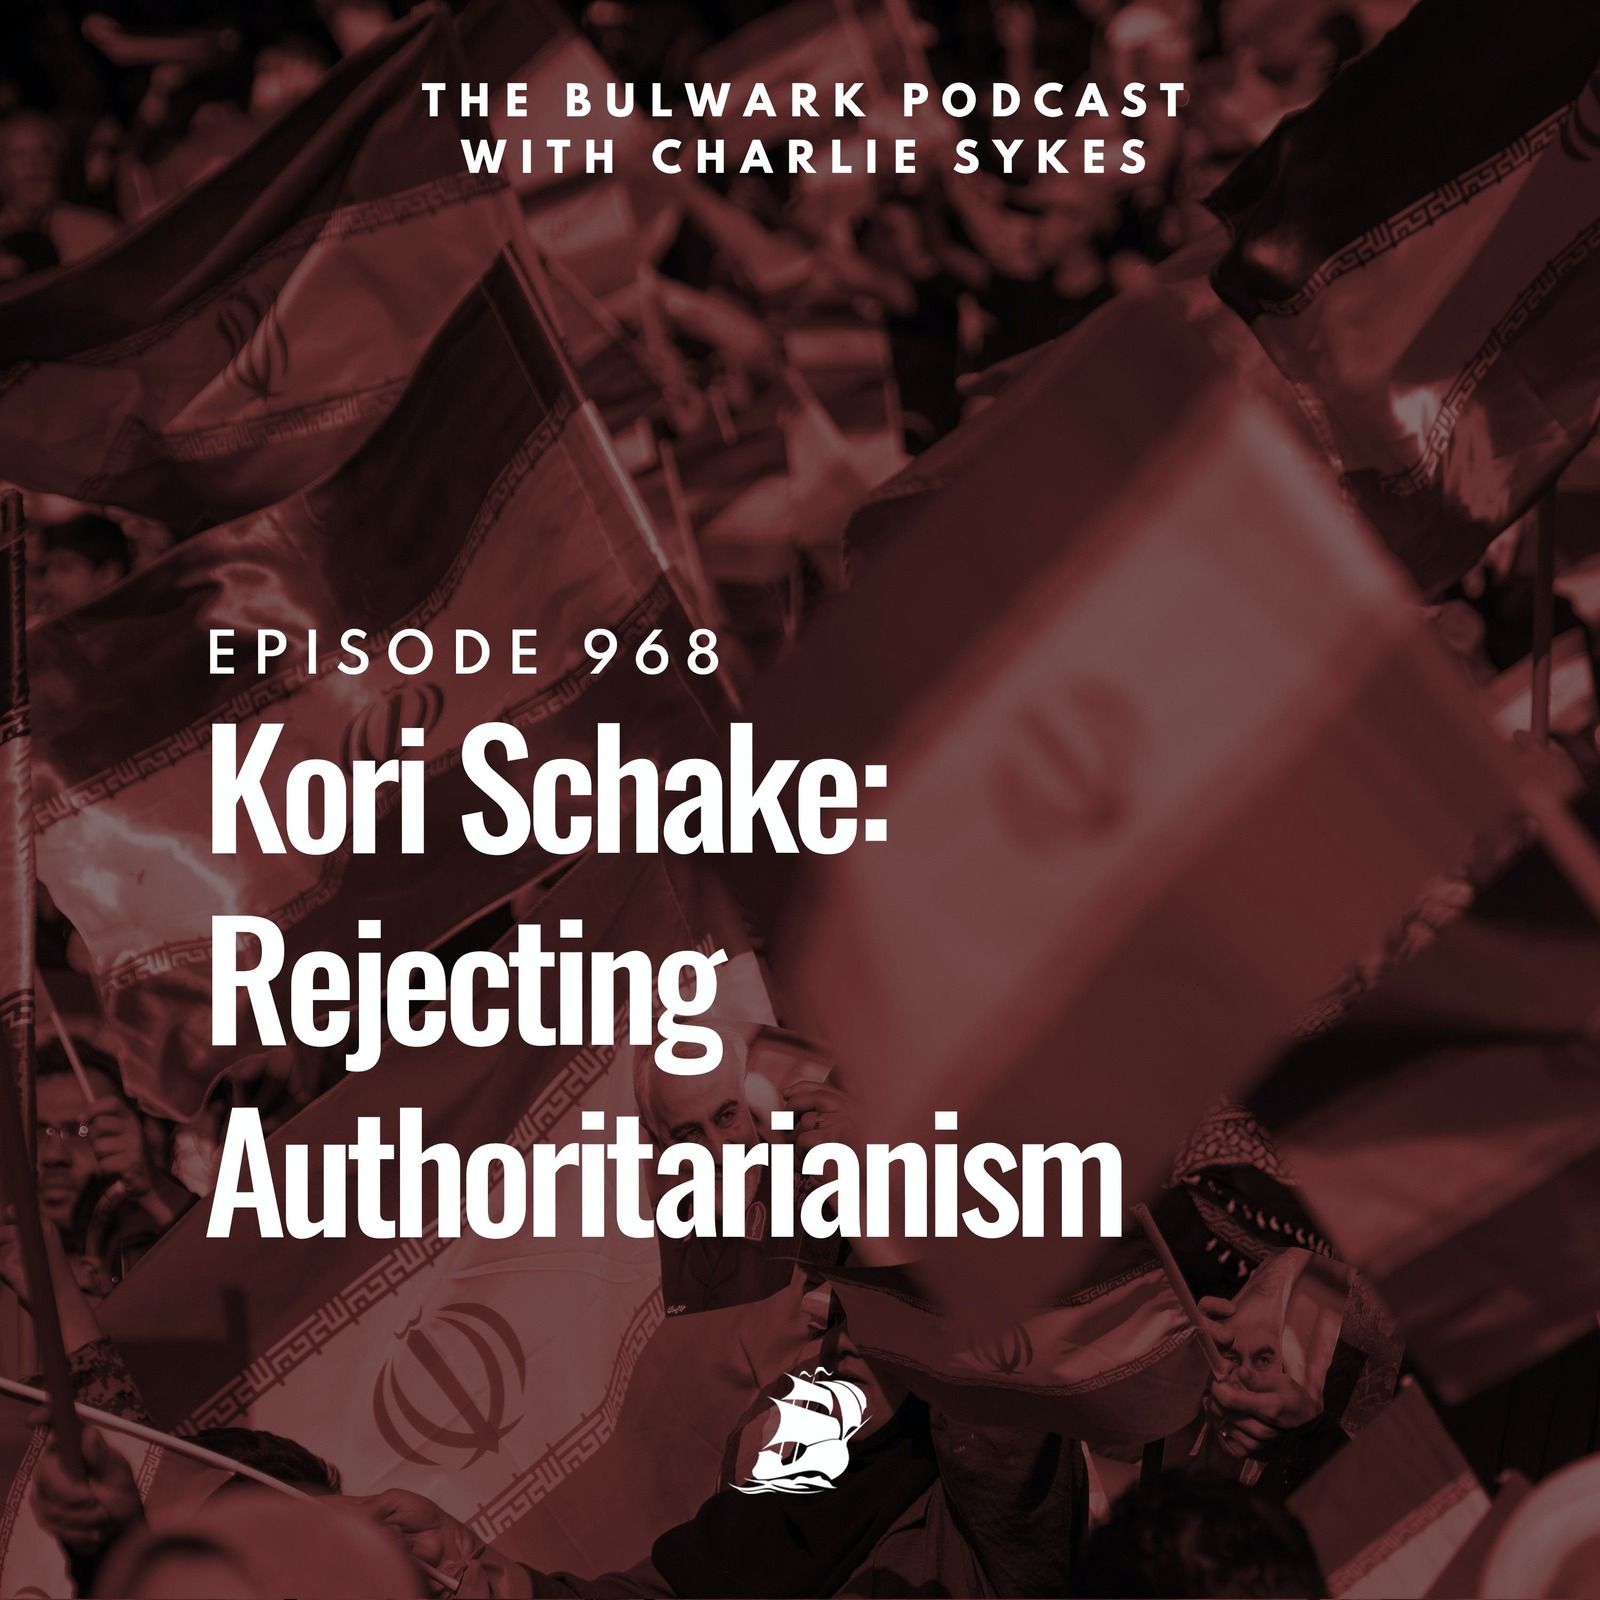 Kori Schake: Rejecting Authoritarianism by The Bulwark Podcast